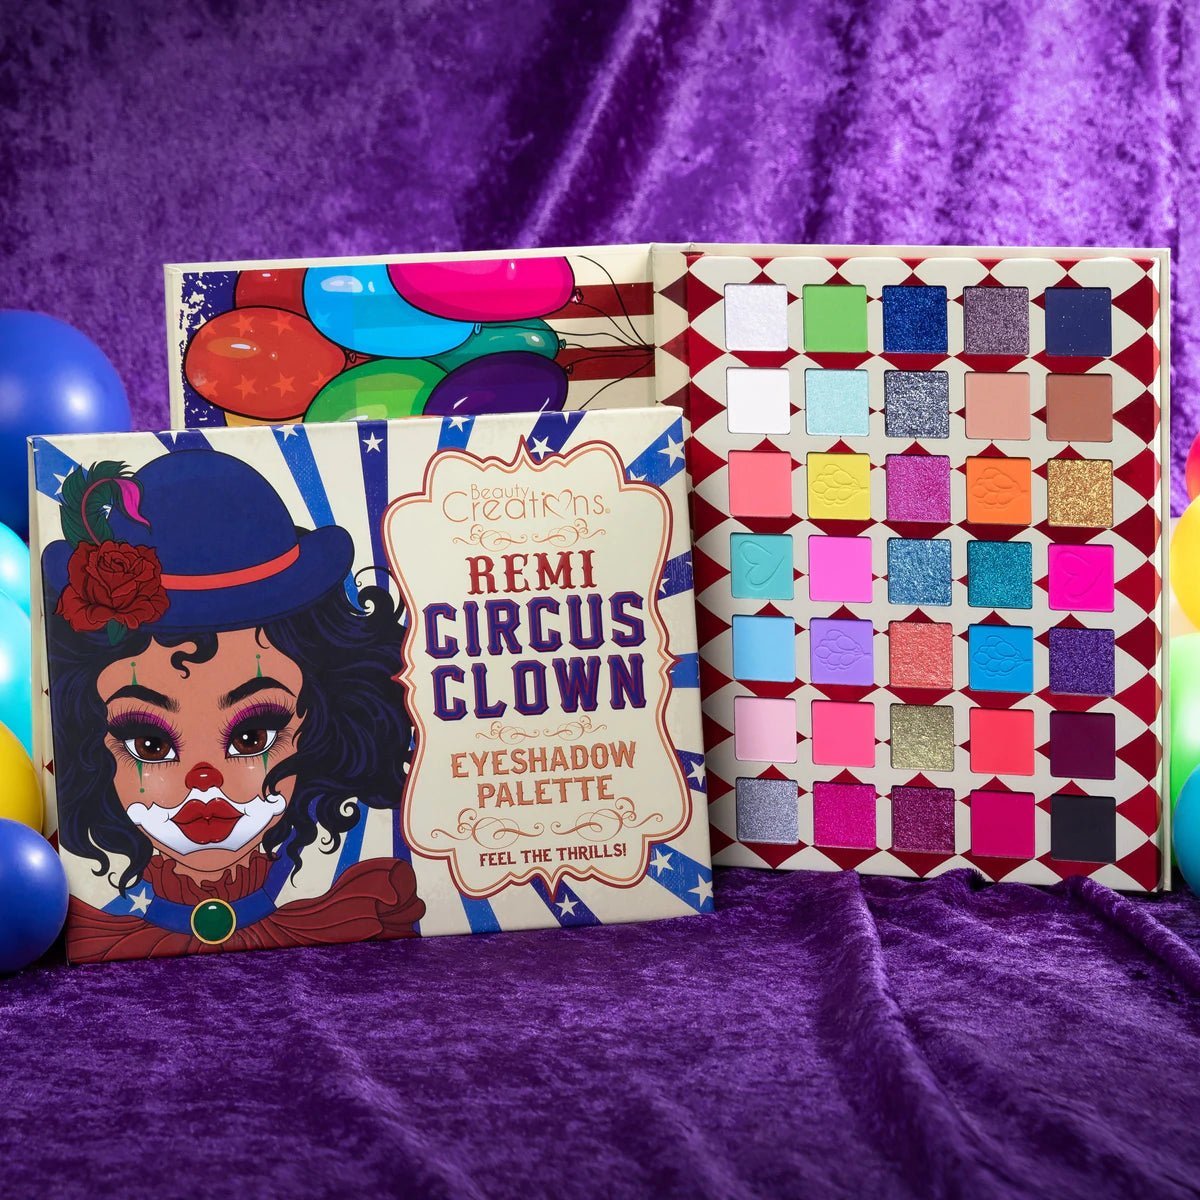 BCC Backup-Cosmetics-Beauty Creations - Remi The Circus Clown - Paleta De Sombras-EC35A